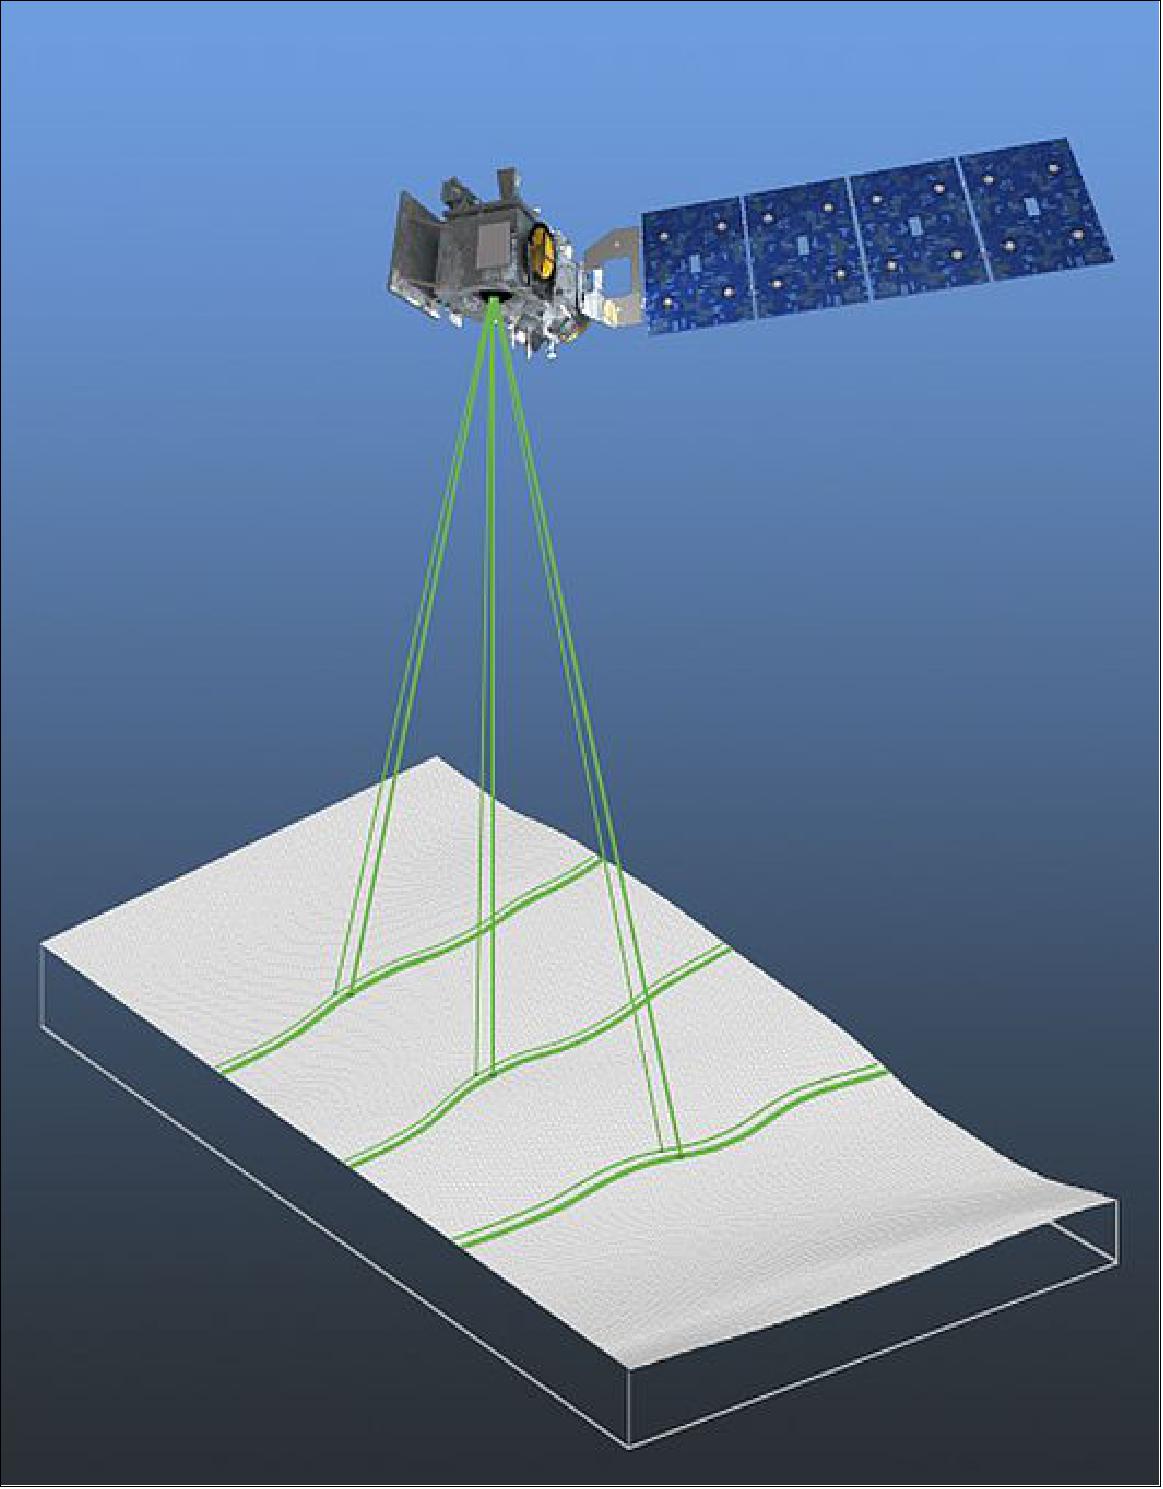 Figure 57: Measurement concept of the ATLAS instrument (image credit: NASA)